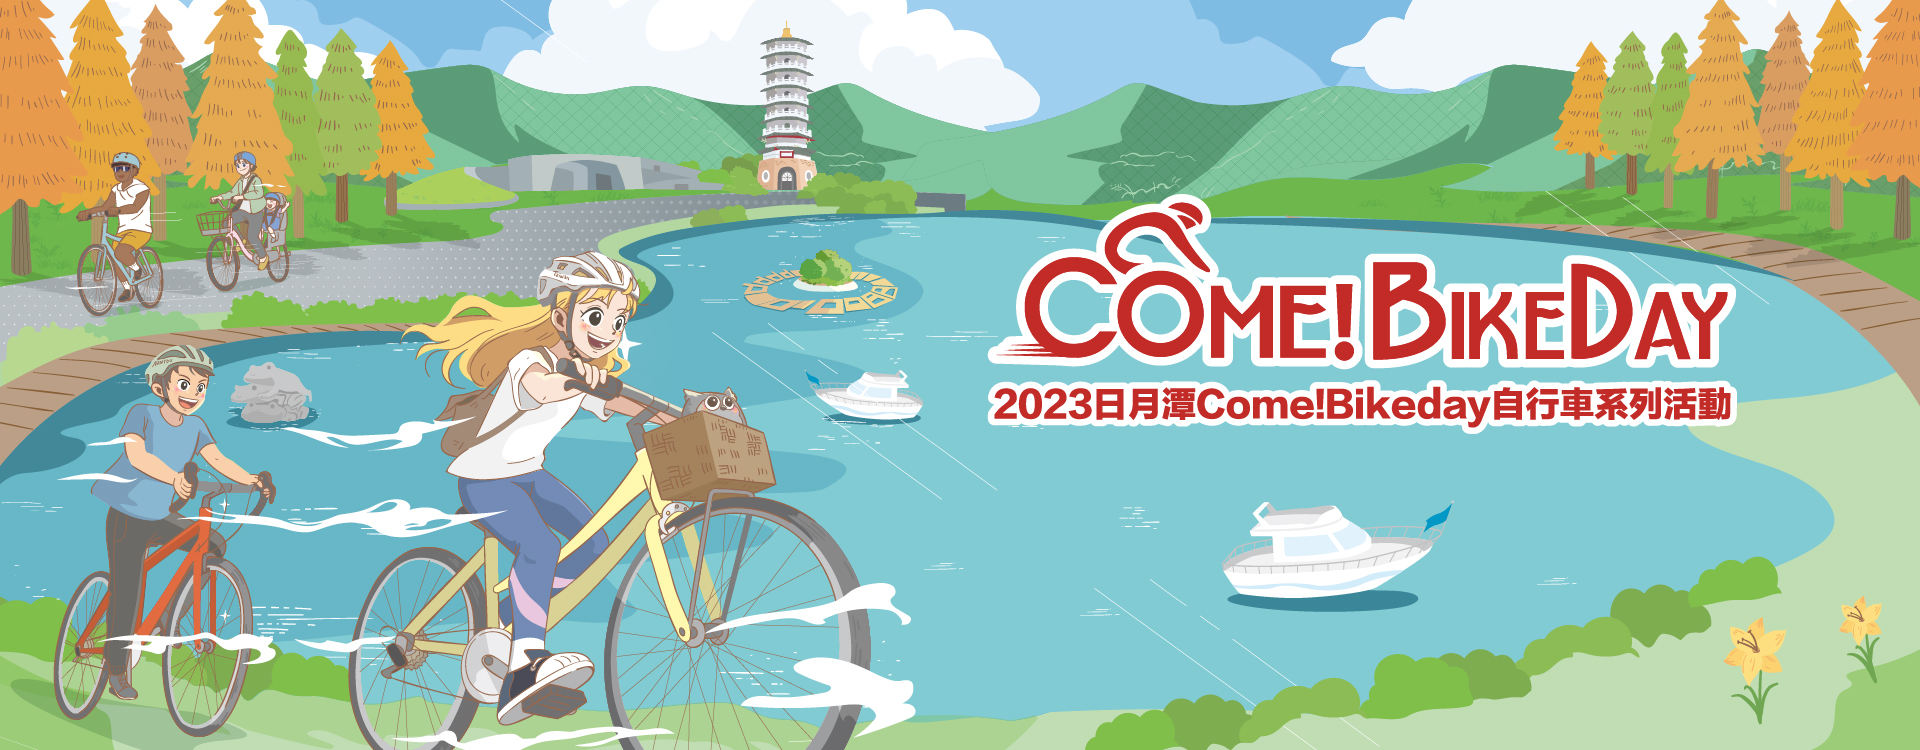 2023Come!BikeDay